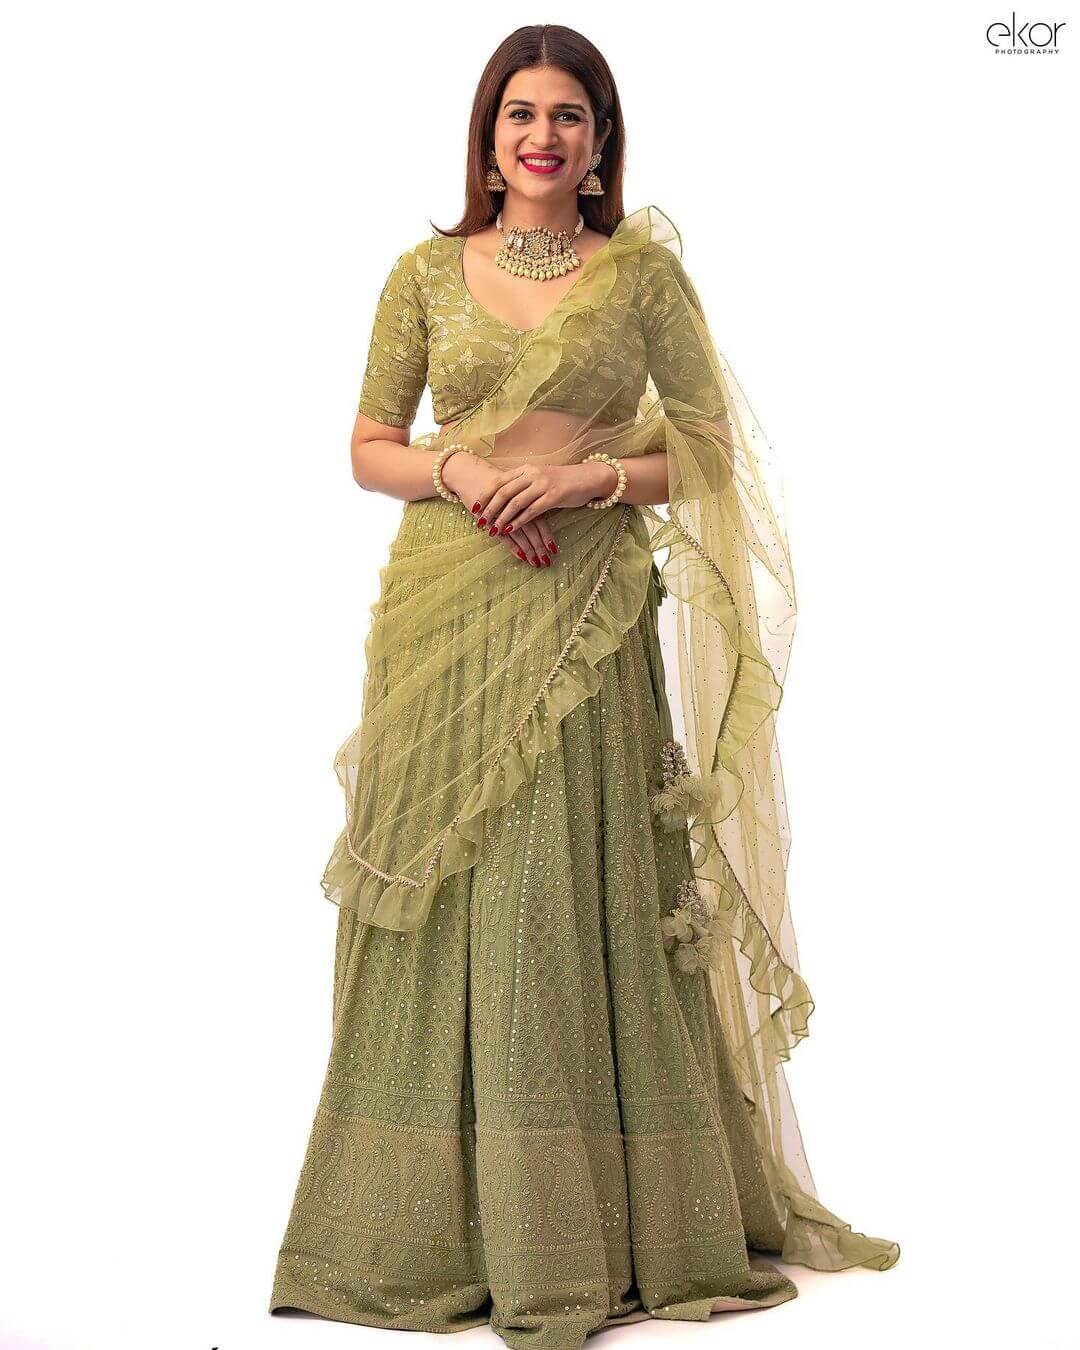 Shraddha Das Ravishing Look In Green Embroidered Lehenga Set With Ruffled Net Dupatta